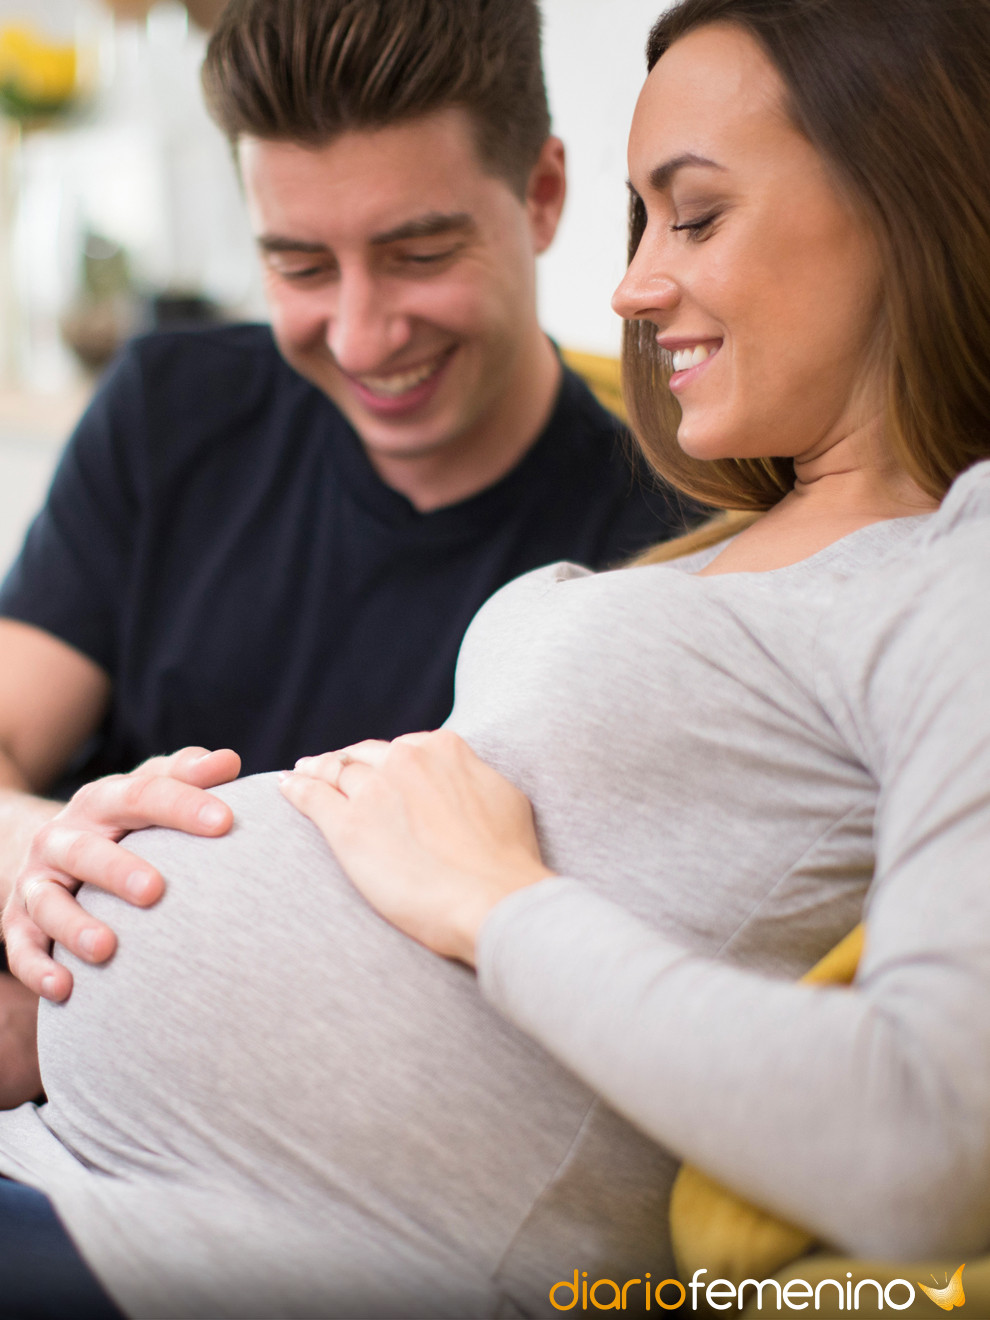 Carta de amor para mi mujer embarazada: palabras para la futura mamá